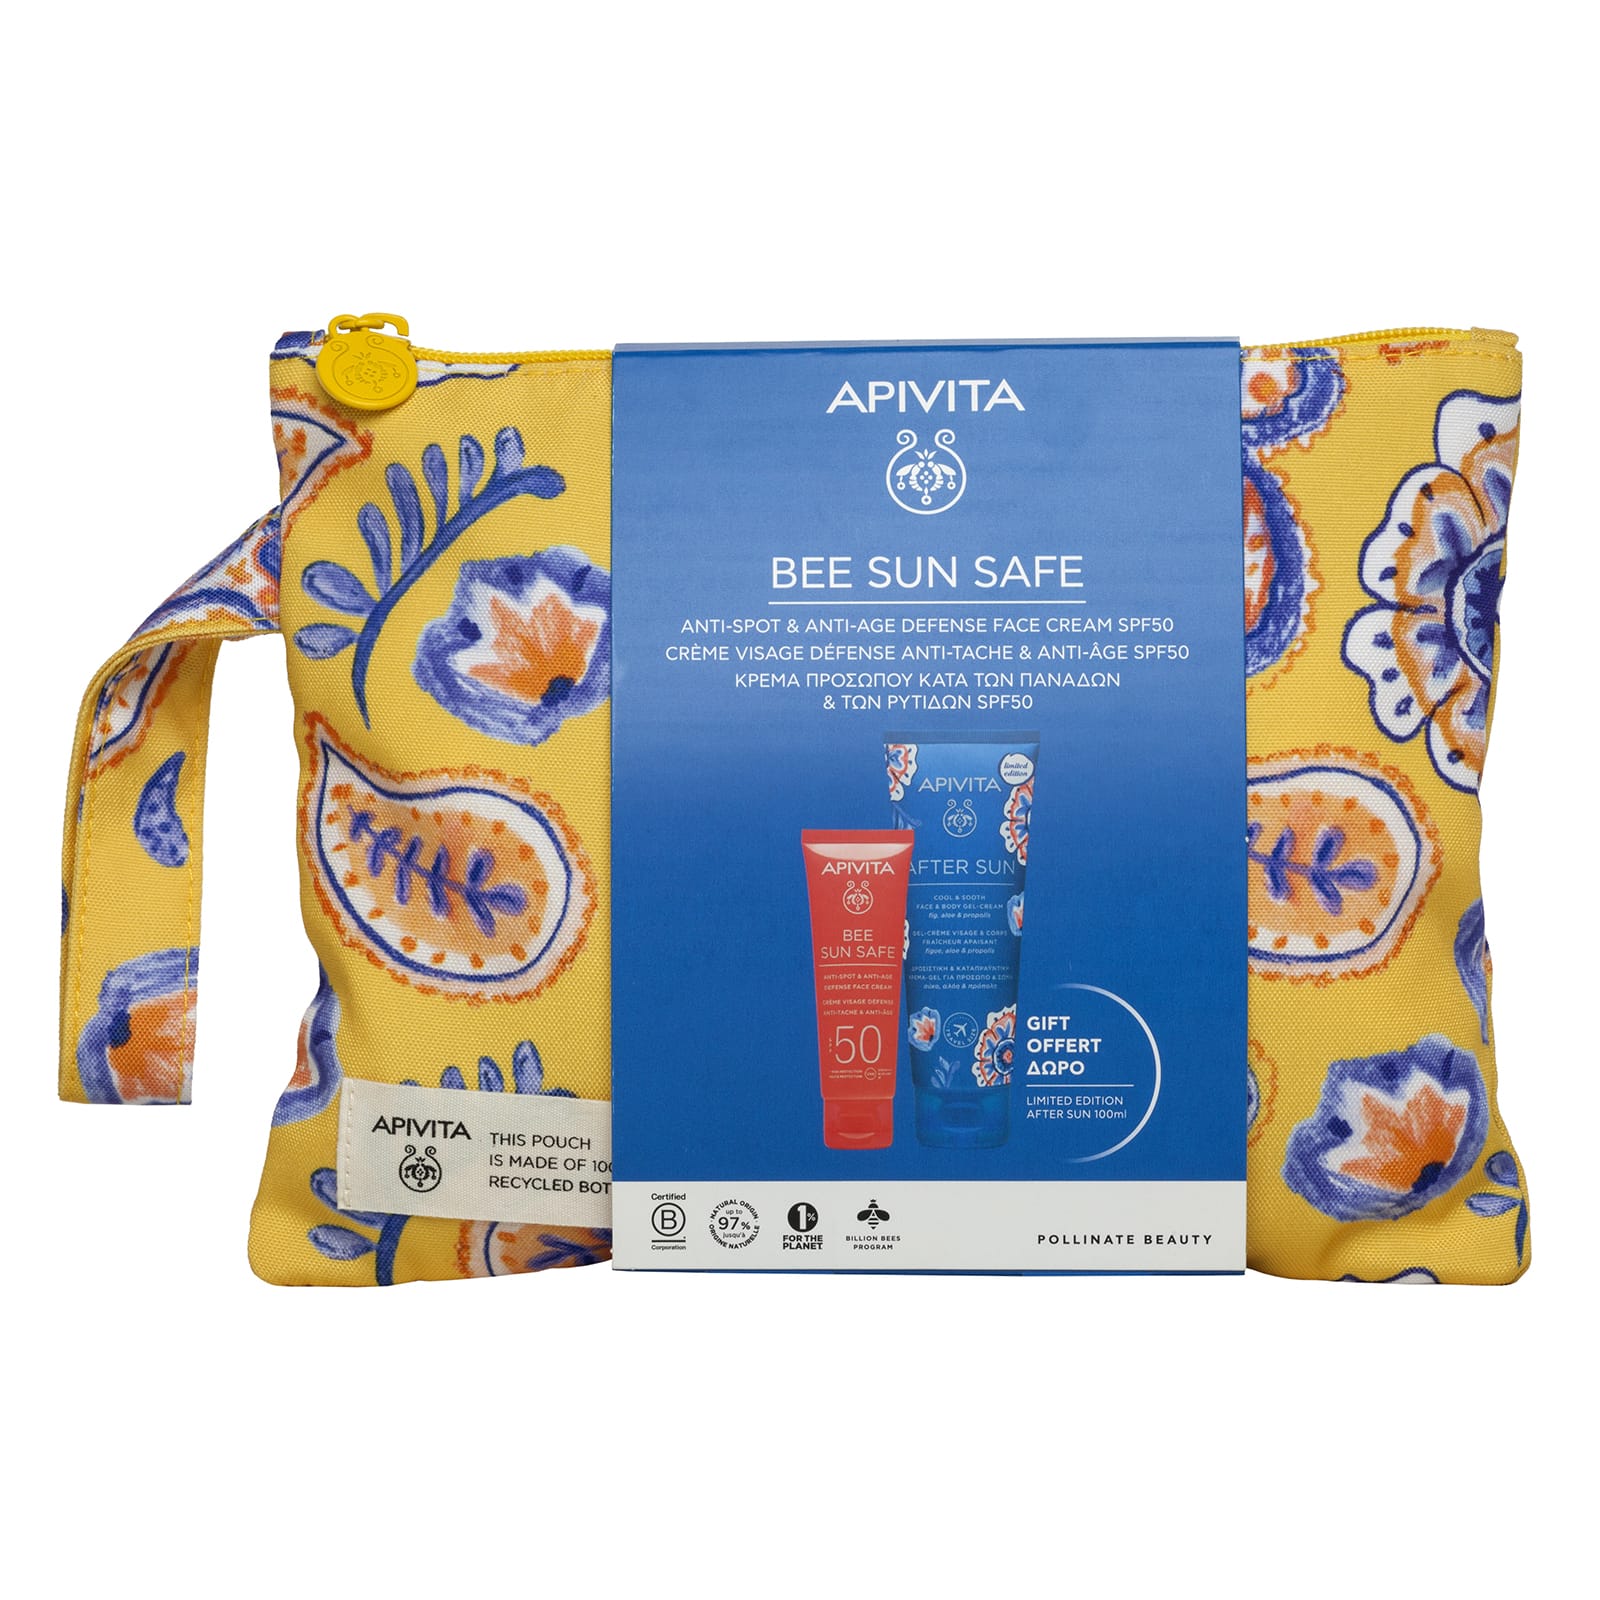 Apivita Promo Bee Sun Safe Κρέμα Προσώπου Κατά Των Πανάδων & Των Ρυτίδων SPF50 50ml & After Sun 100ml